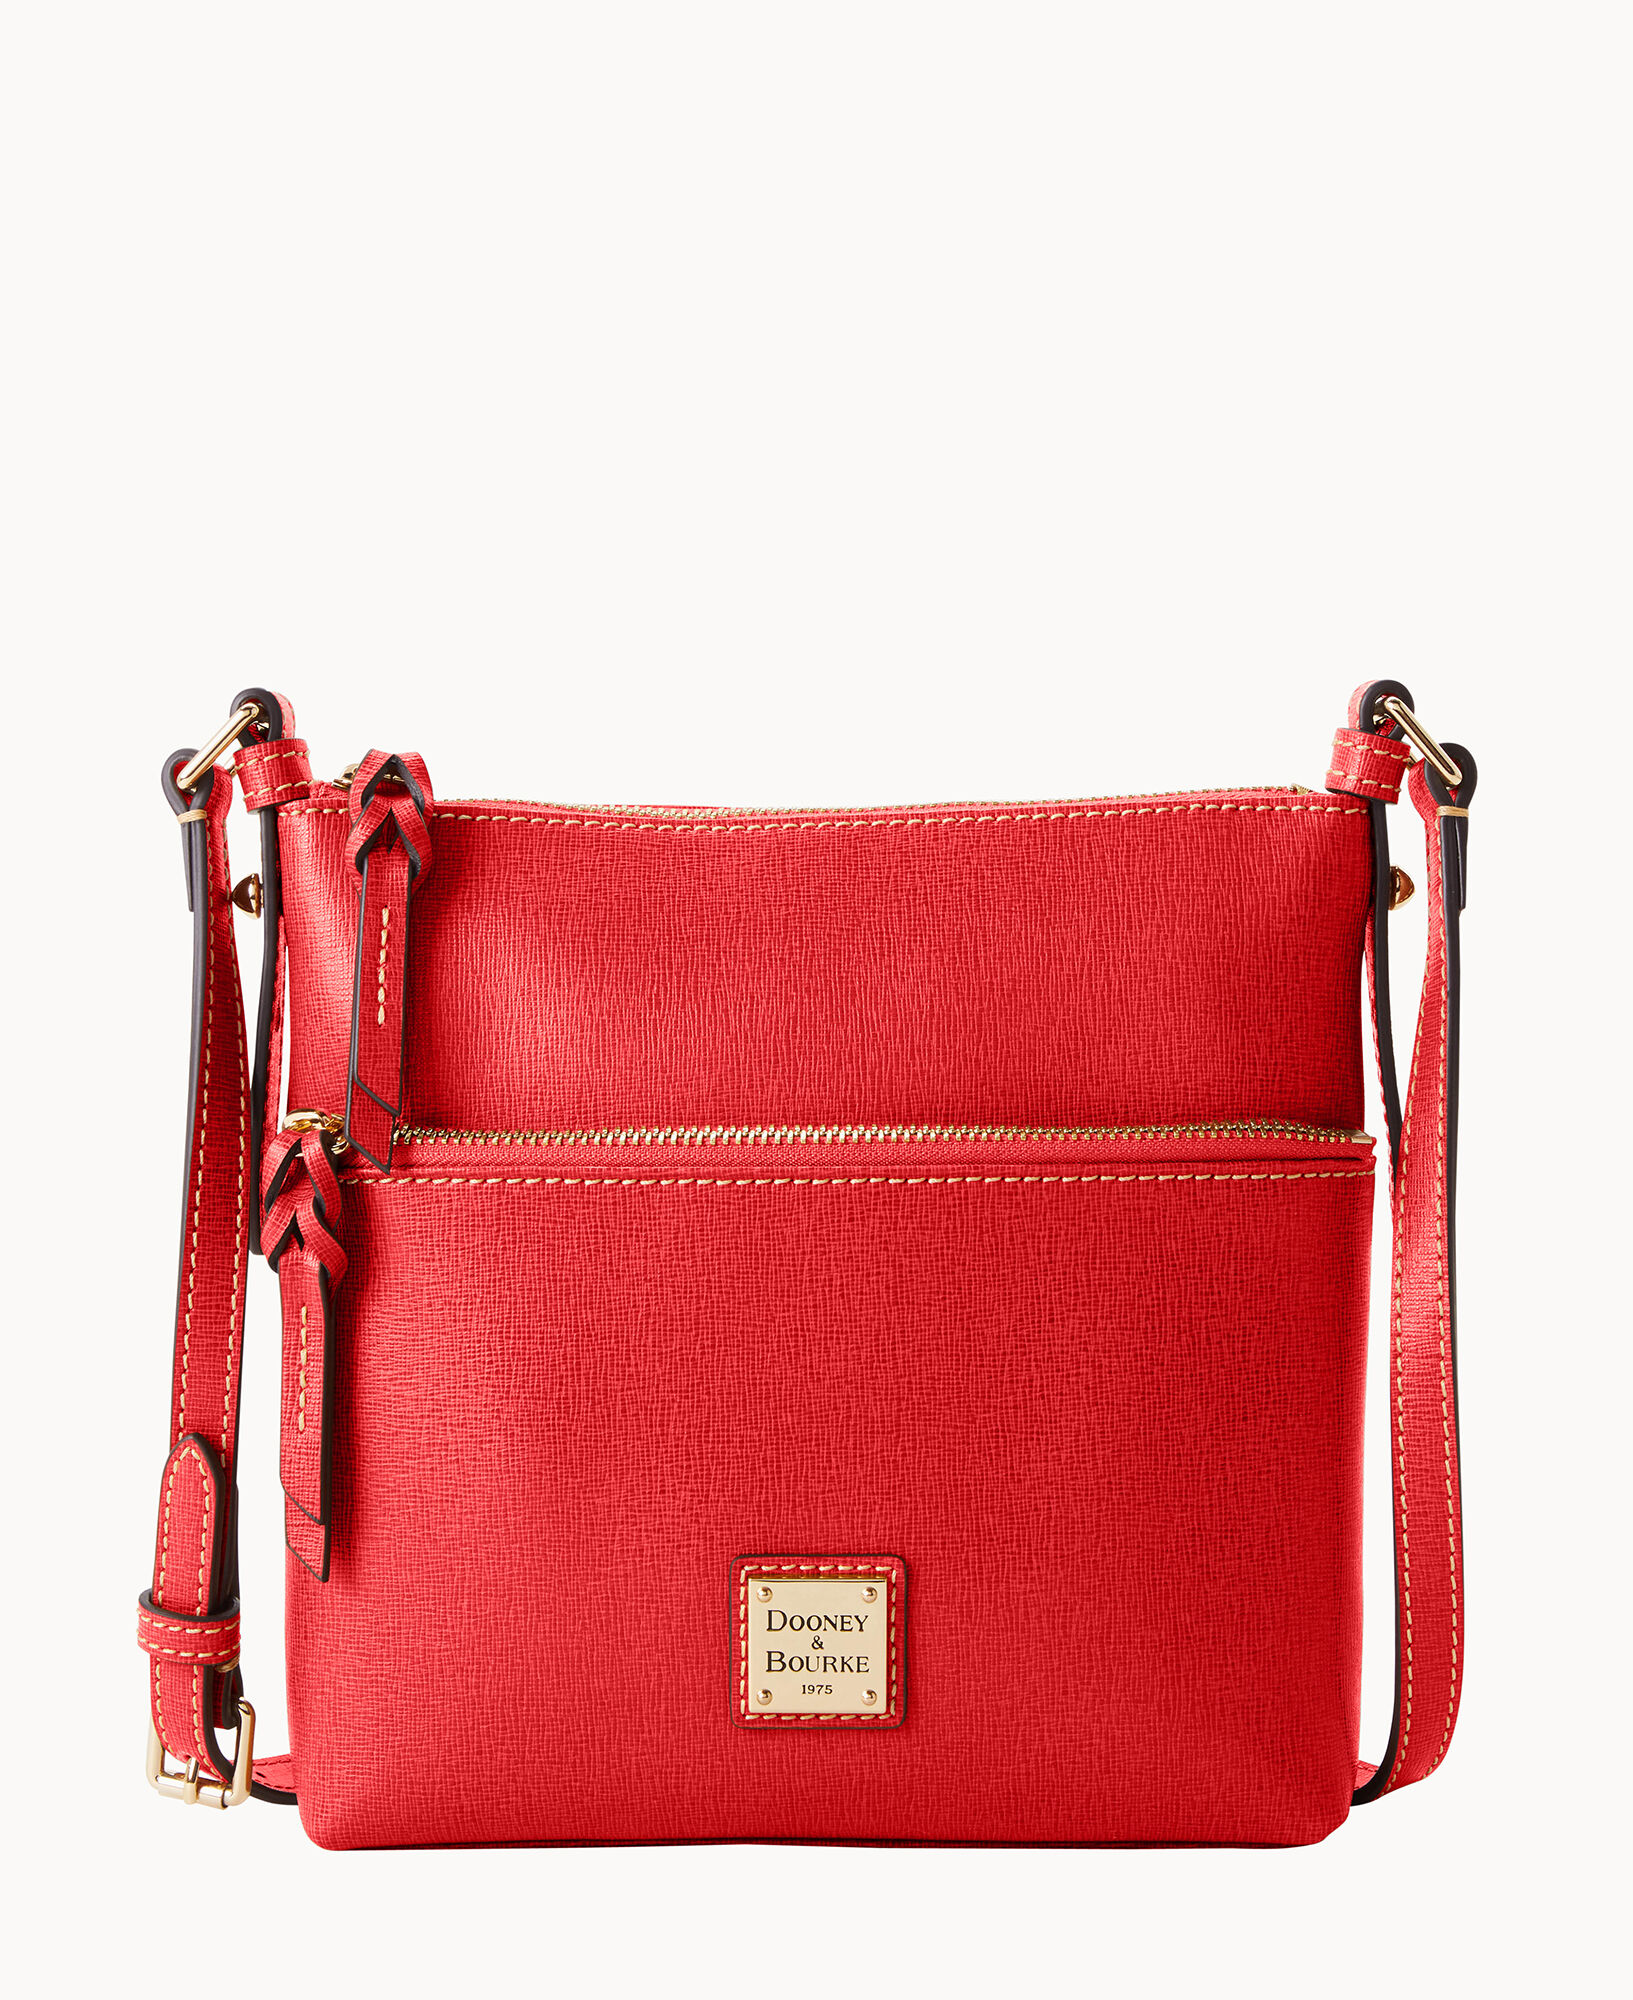 Dooney & Bourke Saffiano Leather Kimberly Crossbody in Red